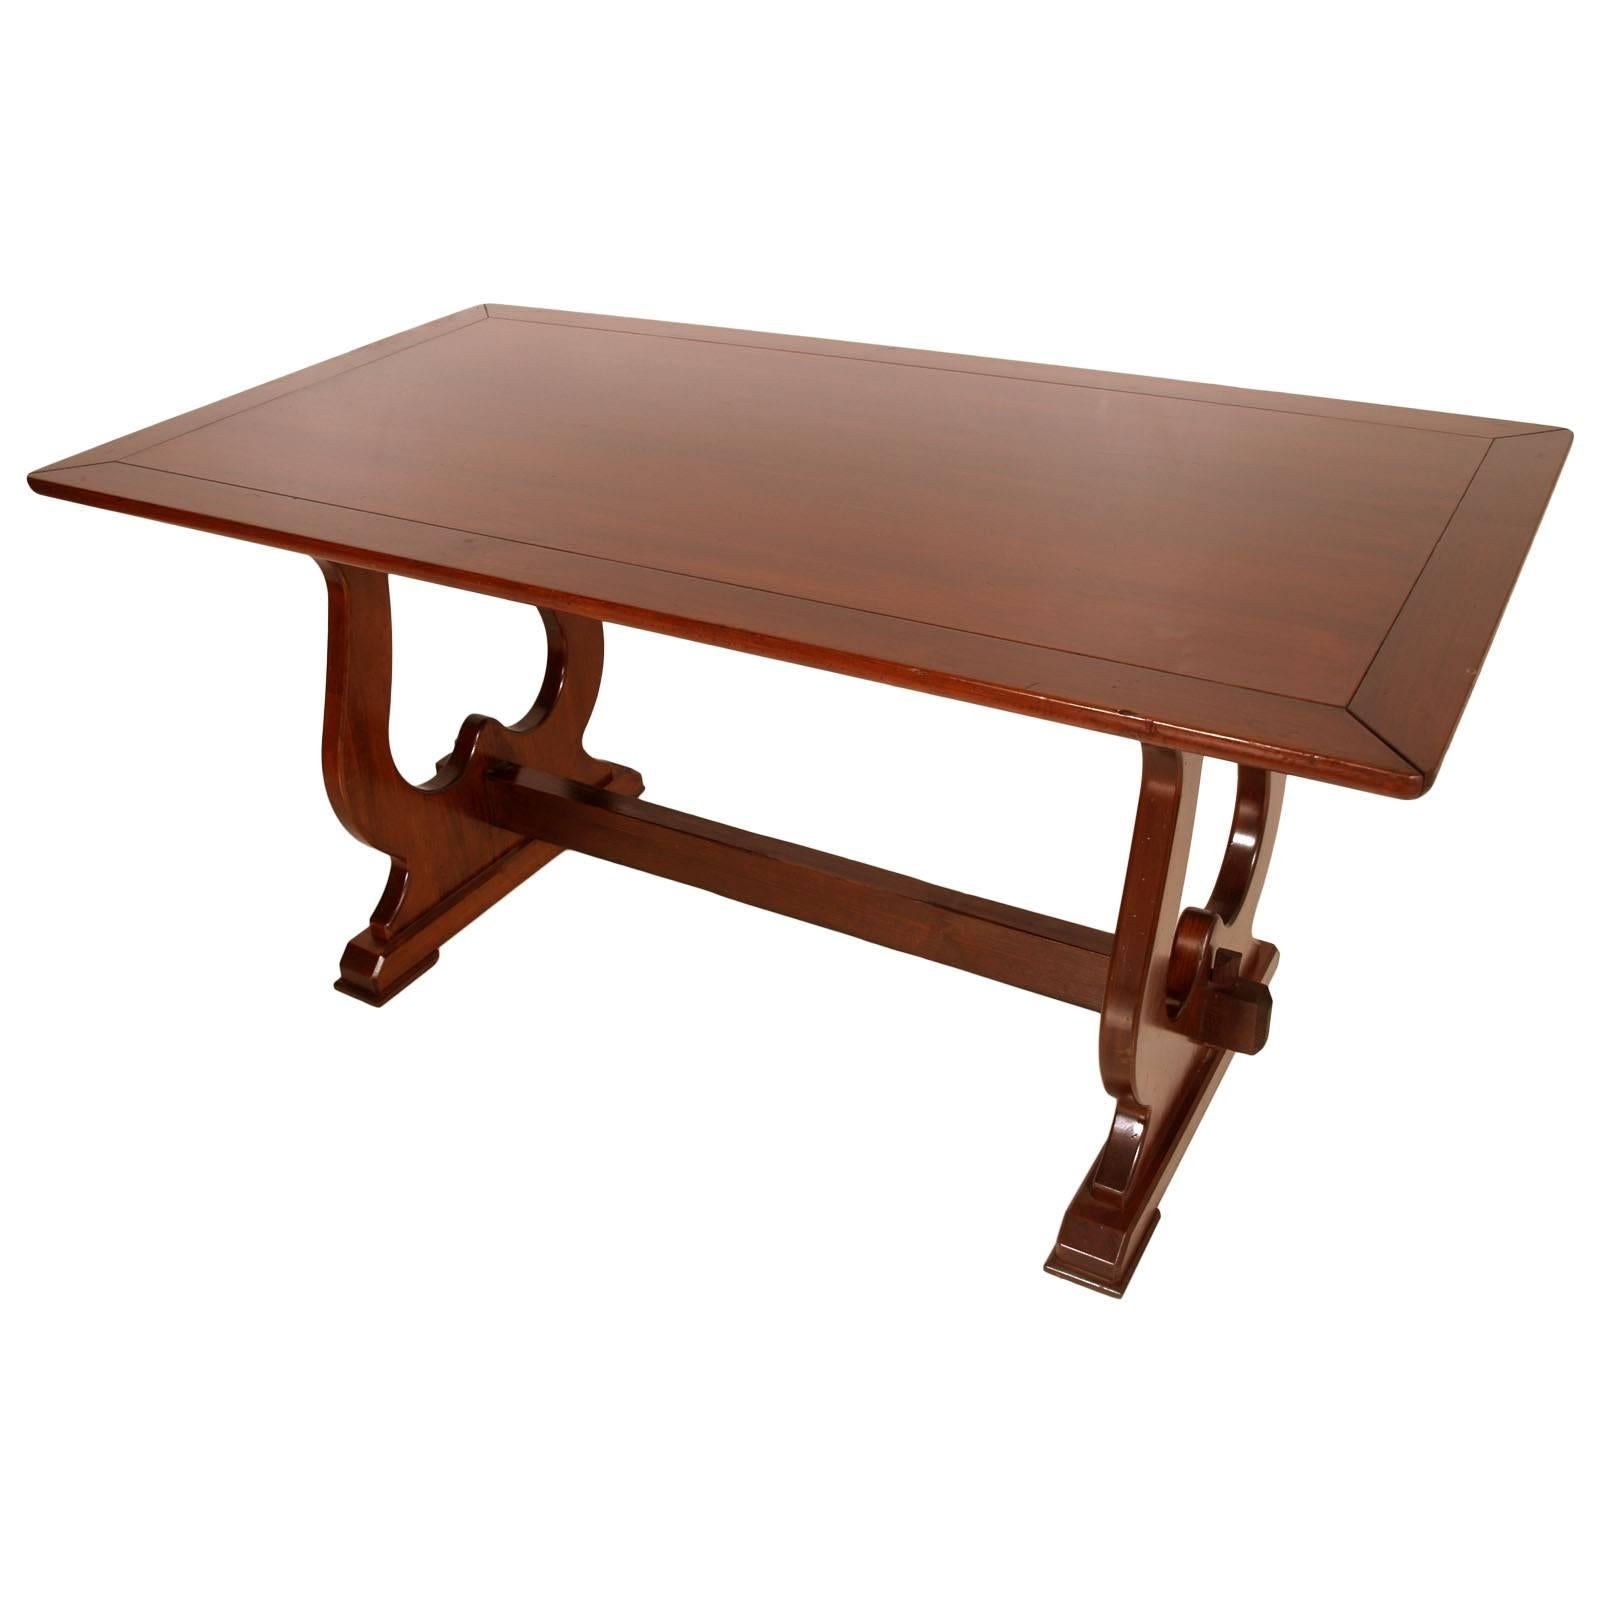 Era Art Deco Elegant Italian Frattino Table All Massive Oak Polished to Wax For Sale